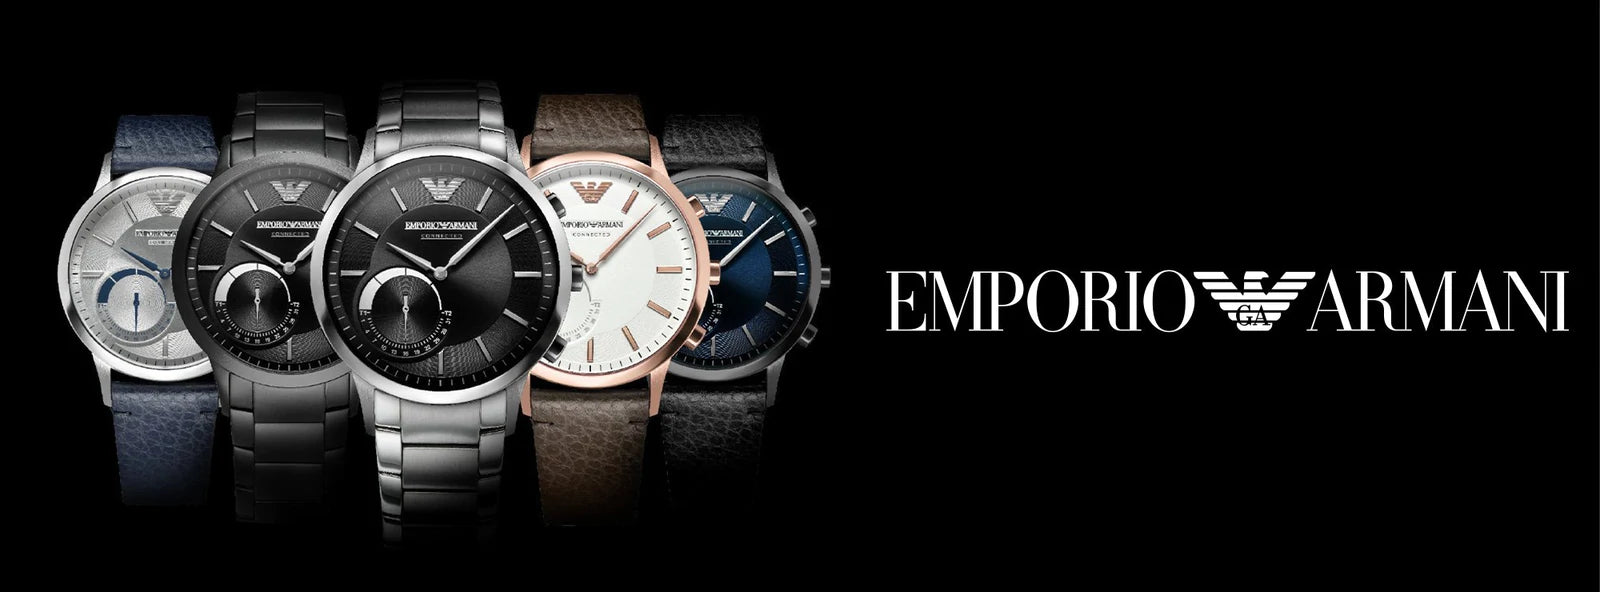 Buy Emporio Armani | Time Watch Specialists